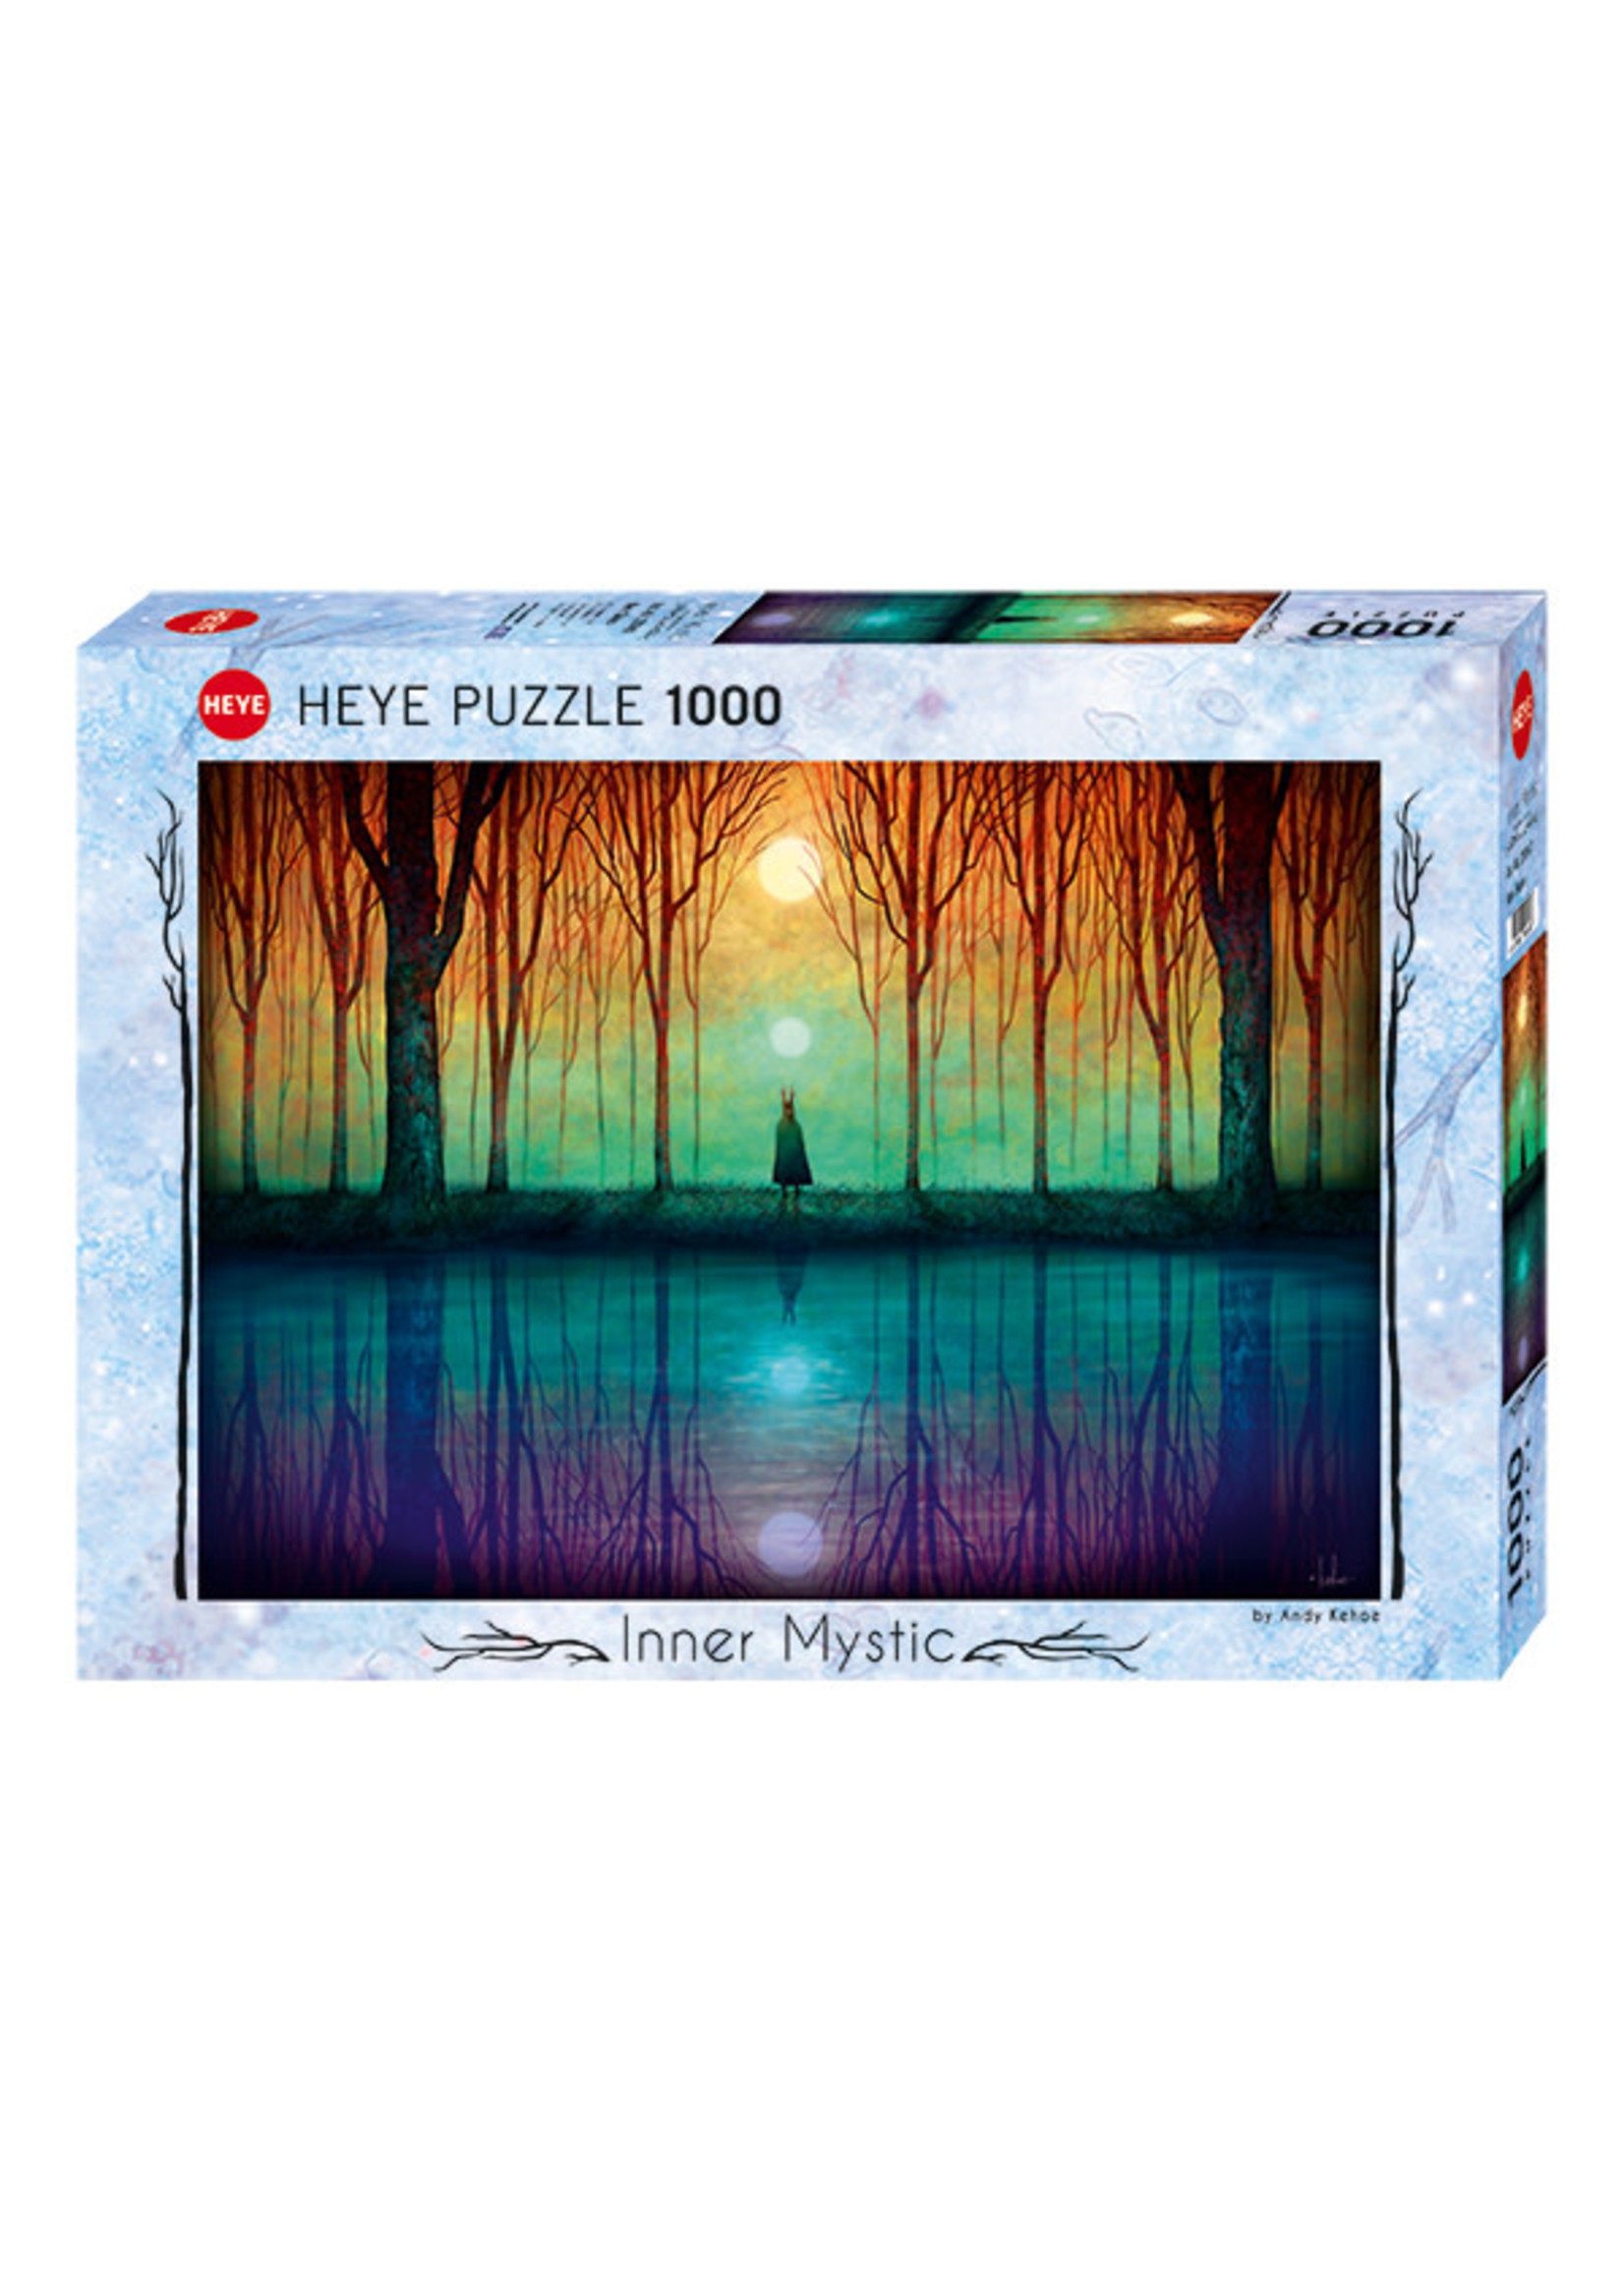 Heye Puzzle Heye 1000 pcs - New skies